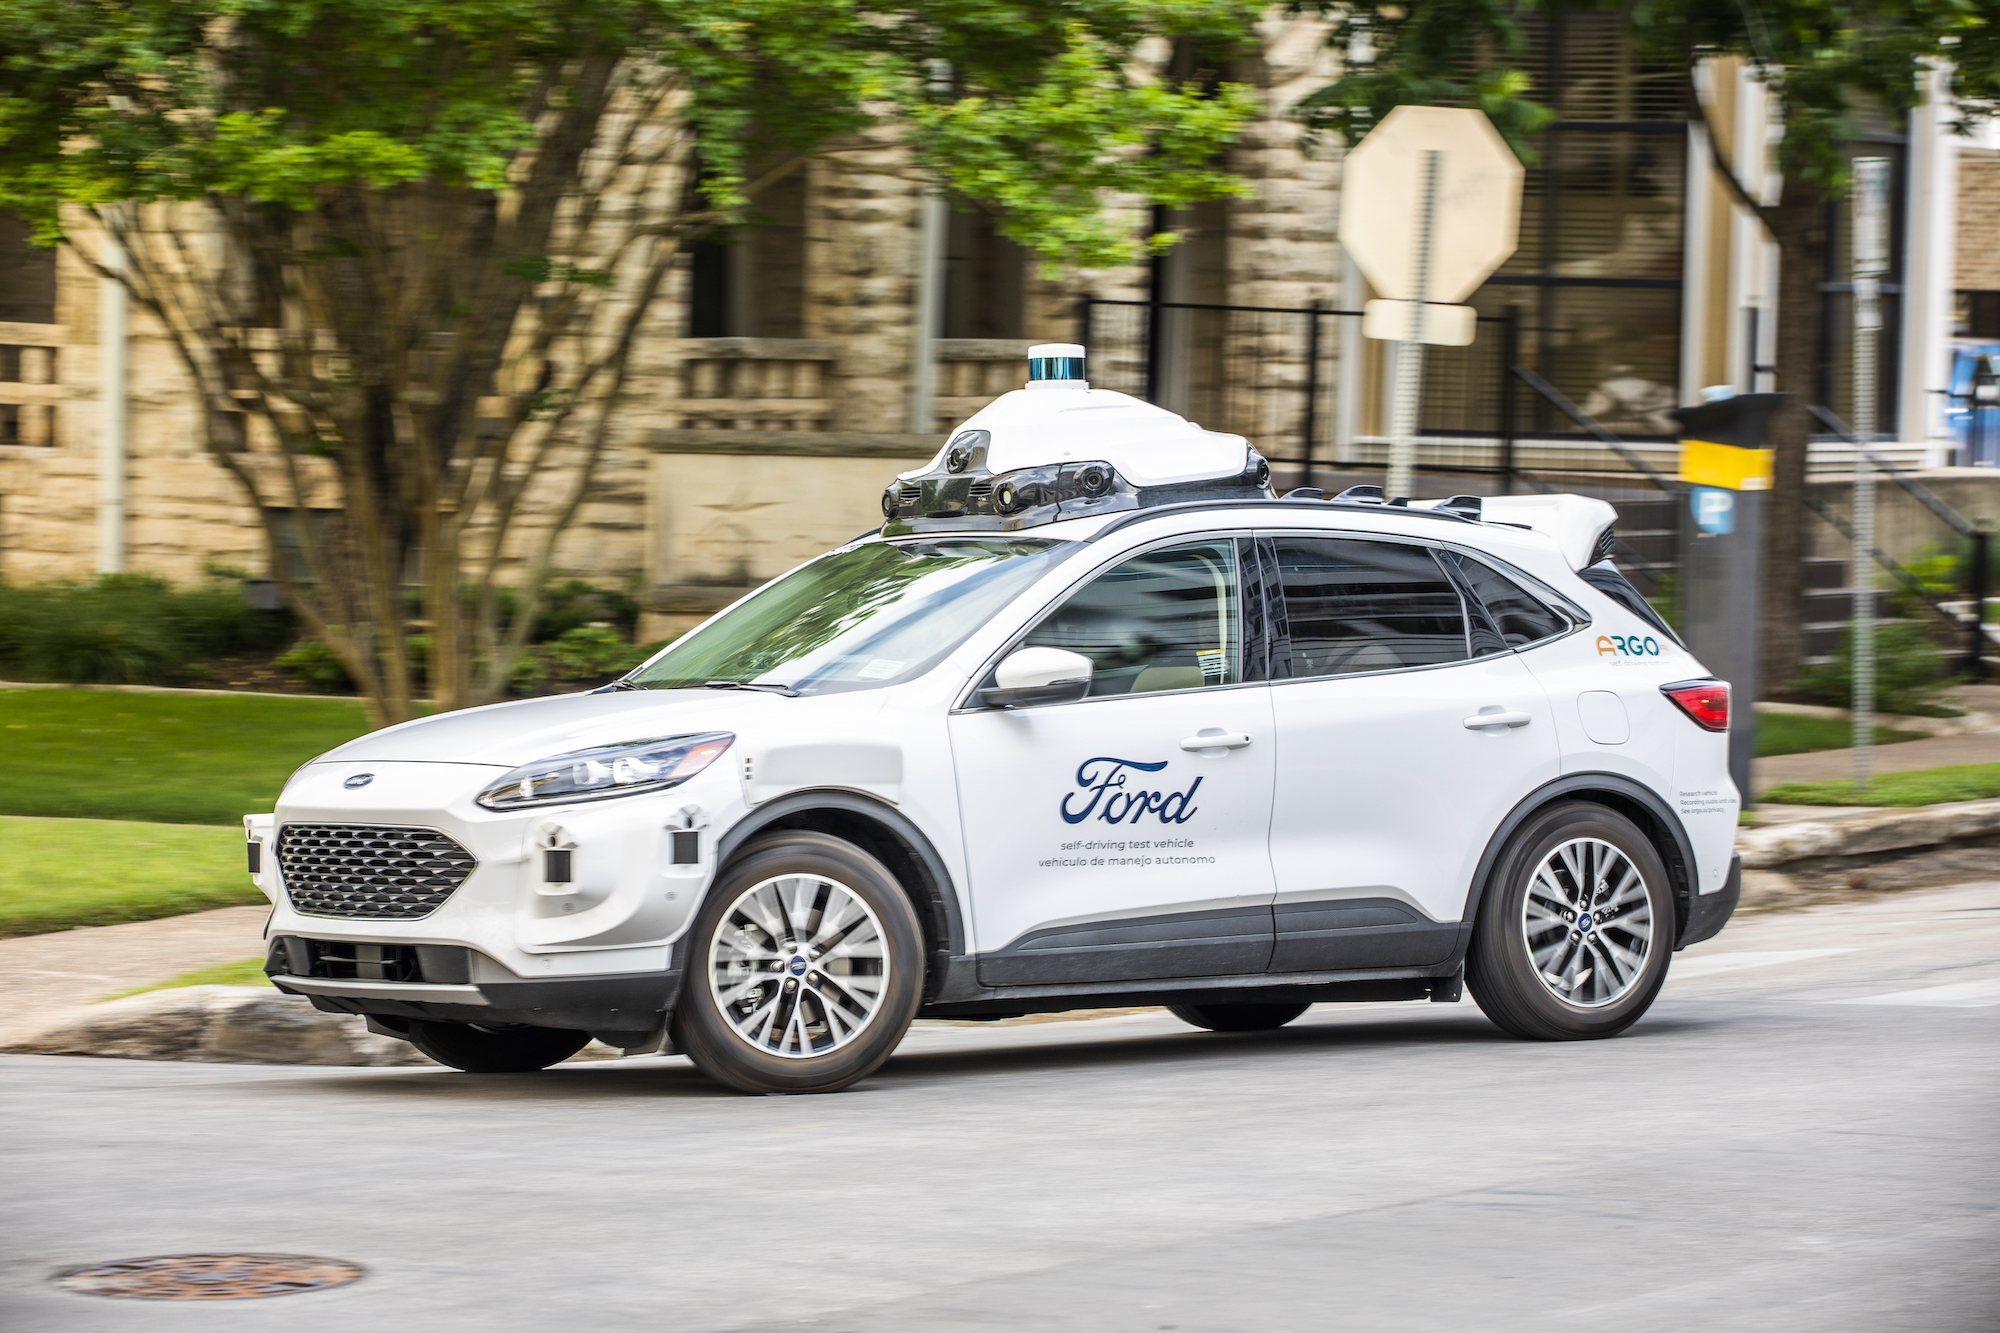 techcrunch.com - Rebecca Bellan - Argo AI launches driverless autonomous vehicle testing in Miami, Austin